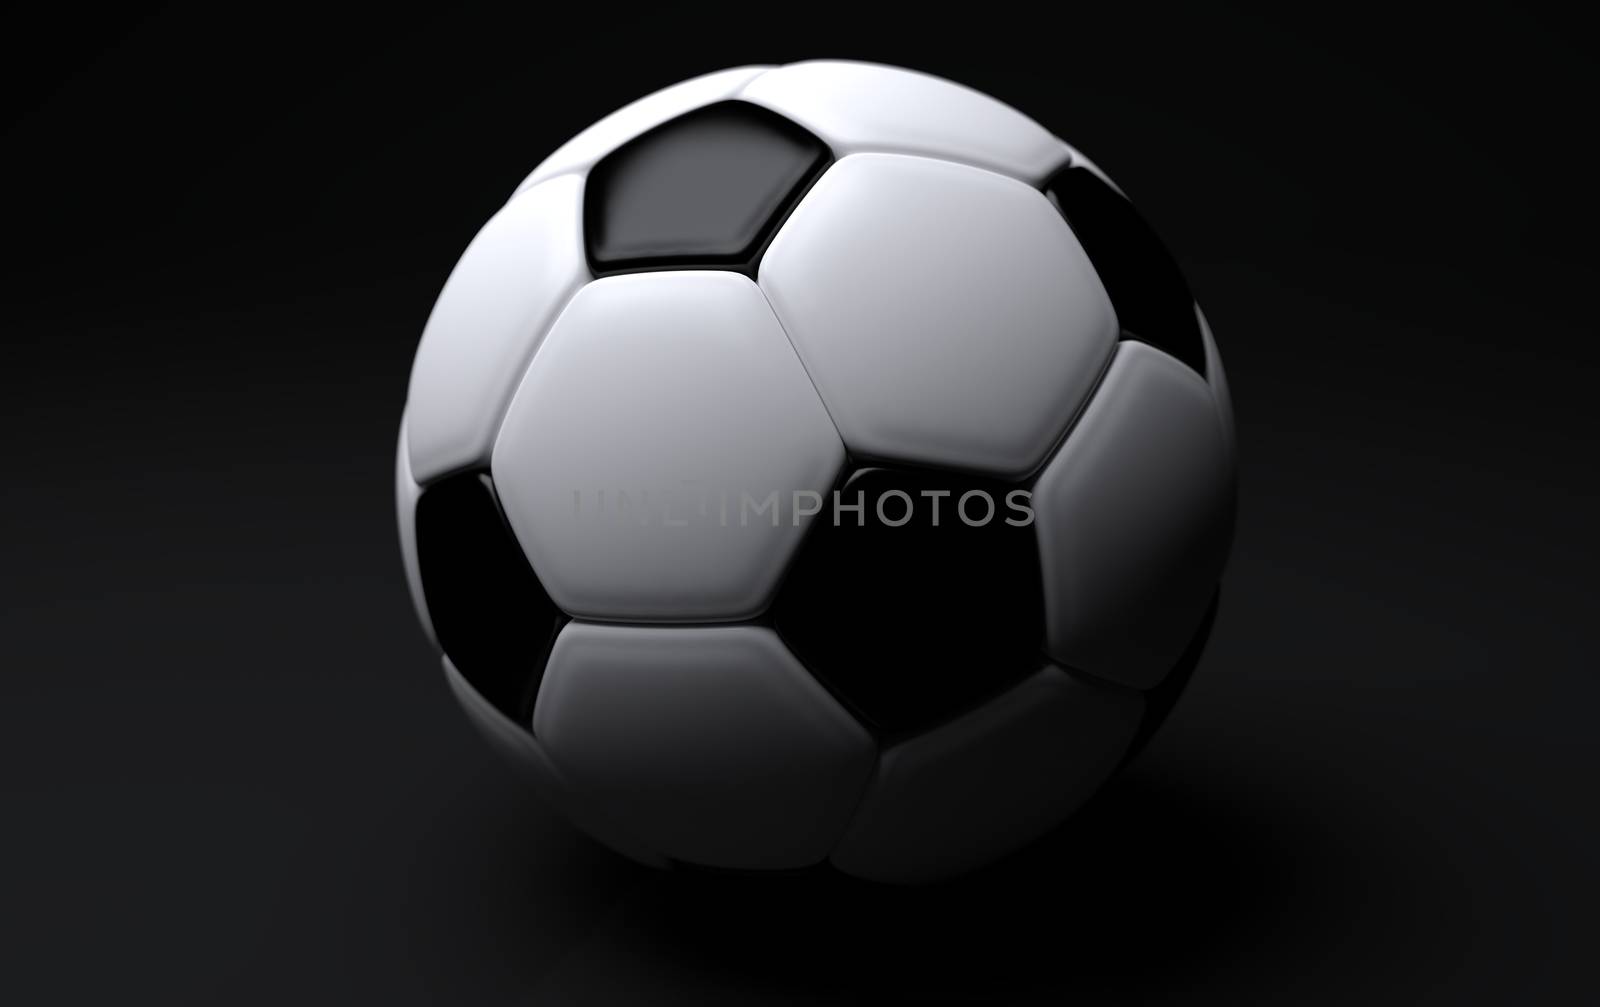 Championship soccer, football ball on black background